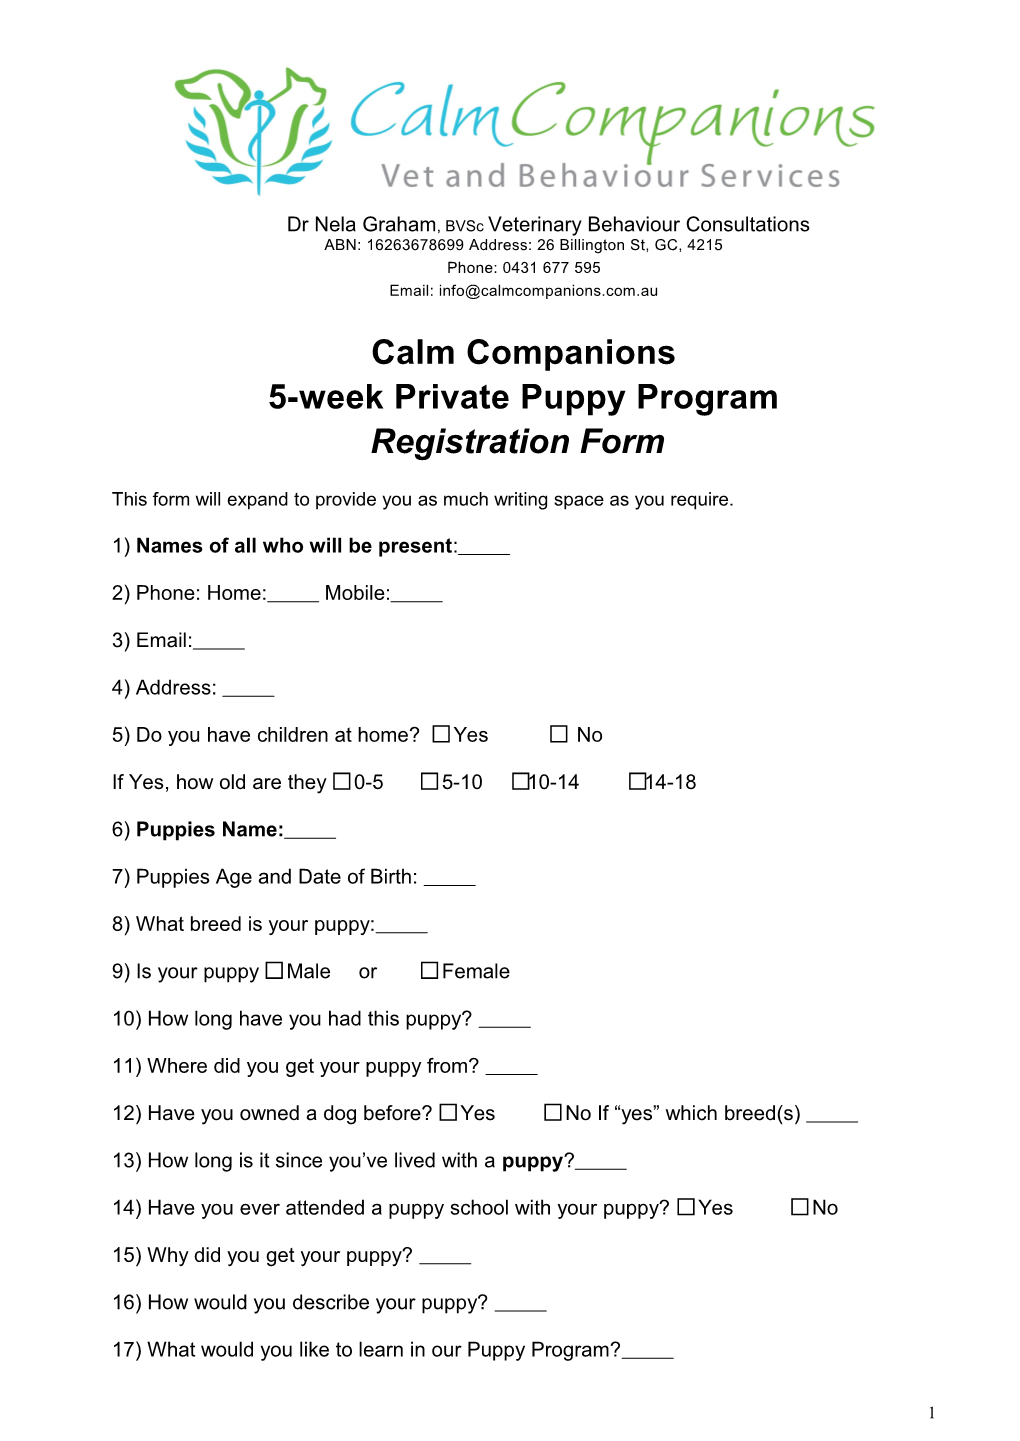 5-Week Private Puppy Program